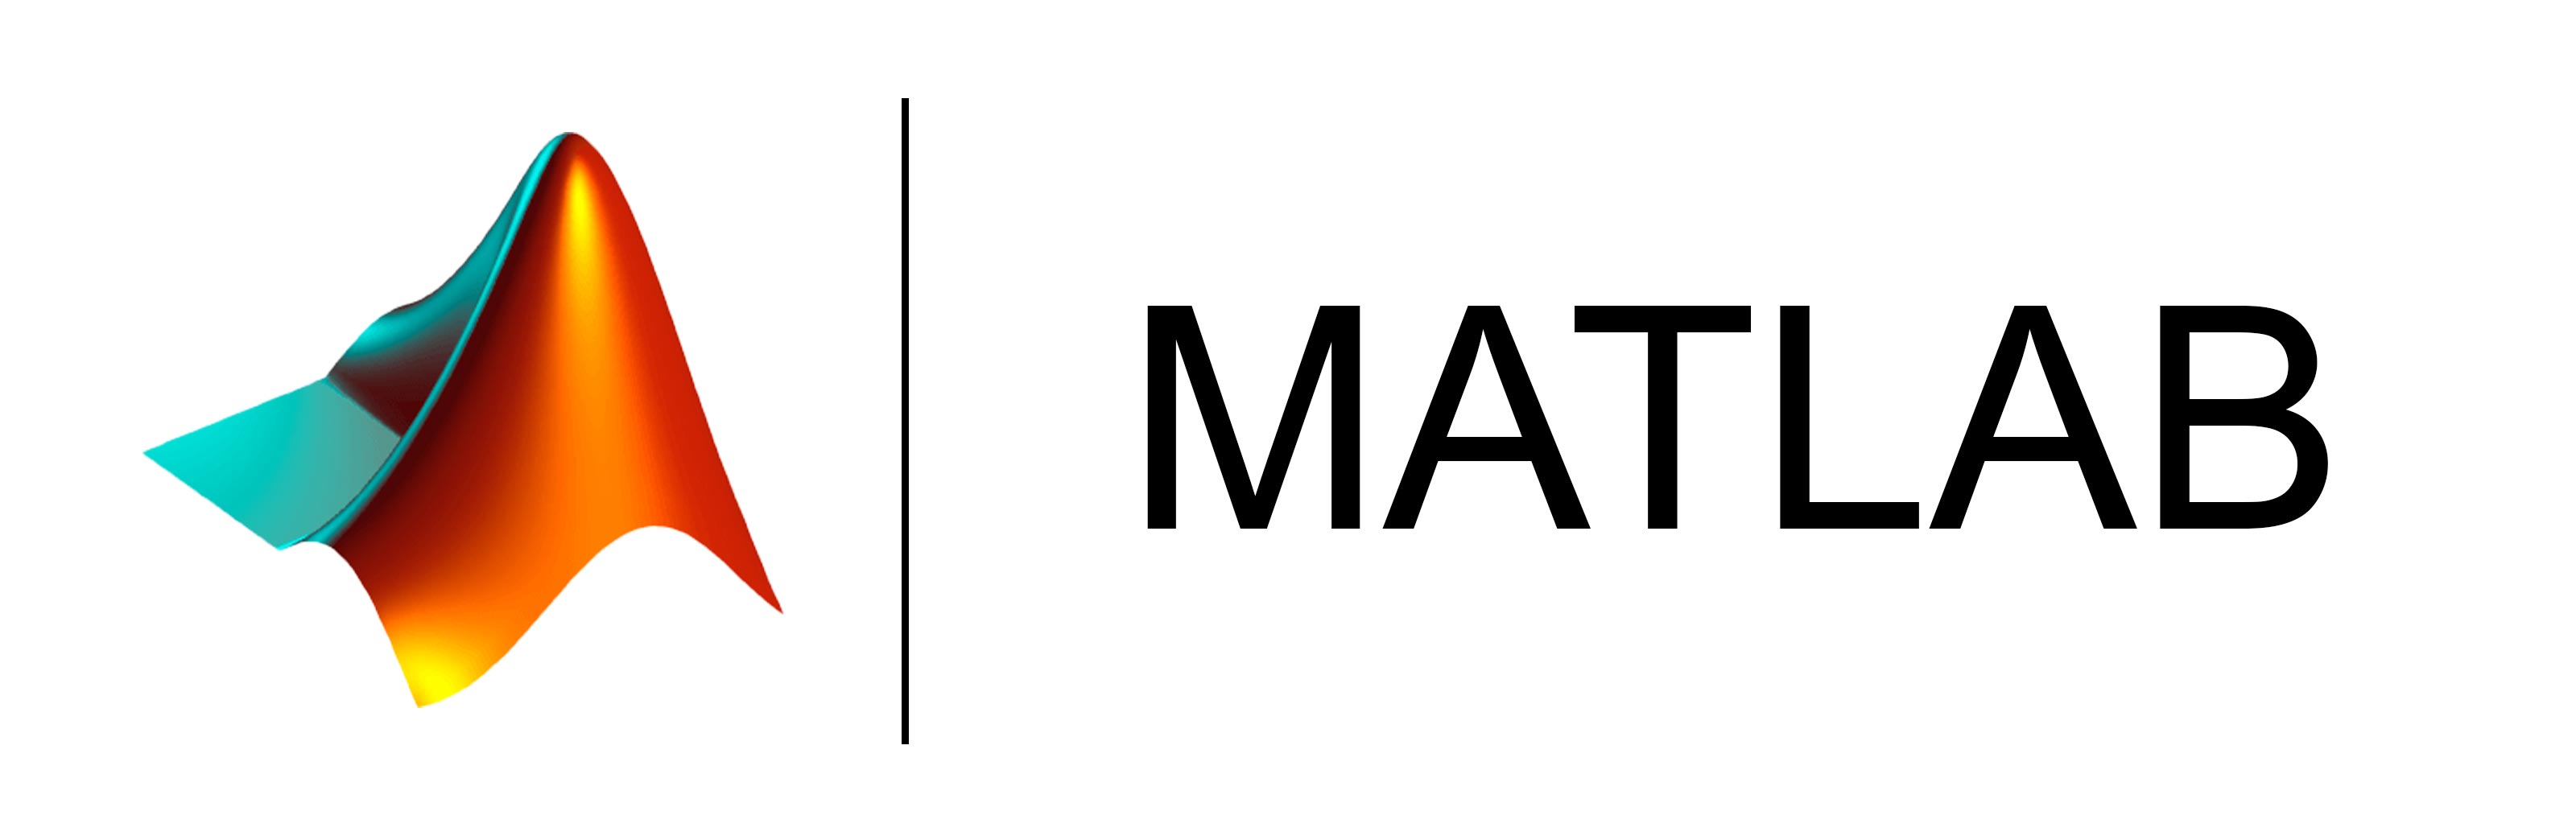 matlab logo mehregan